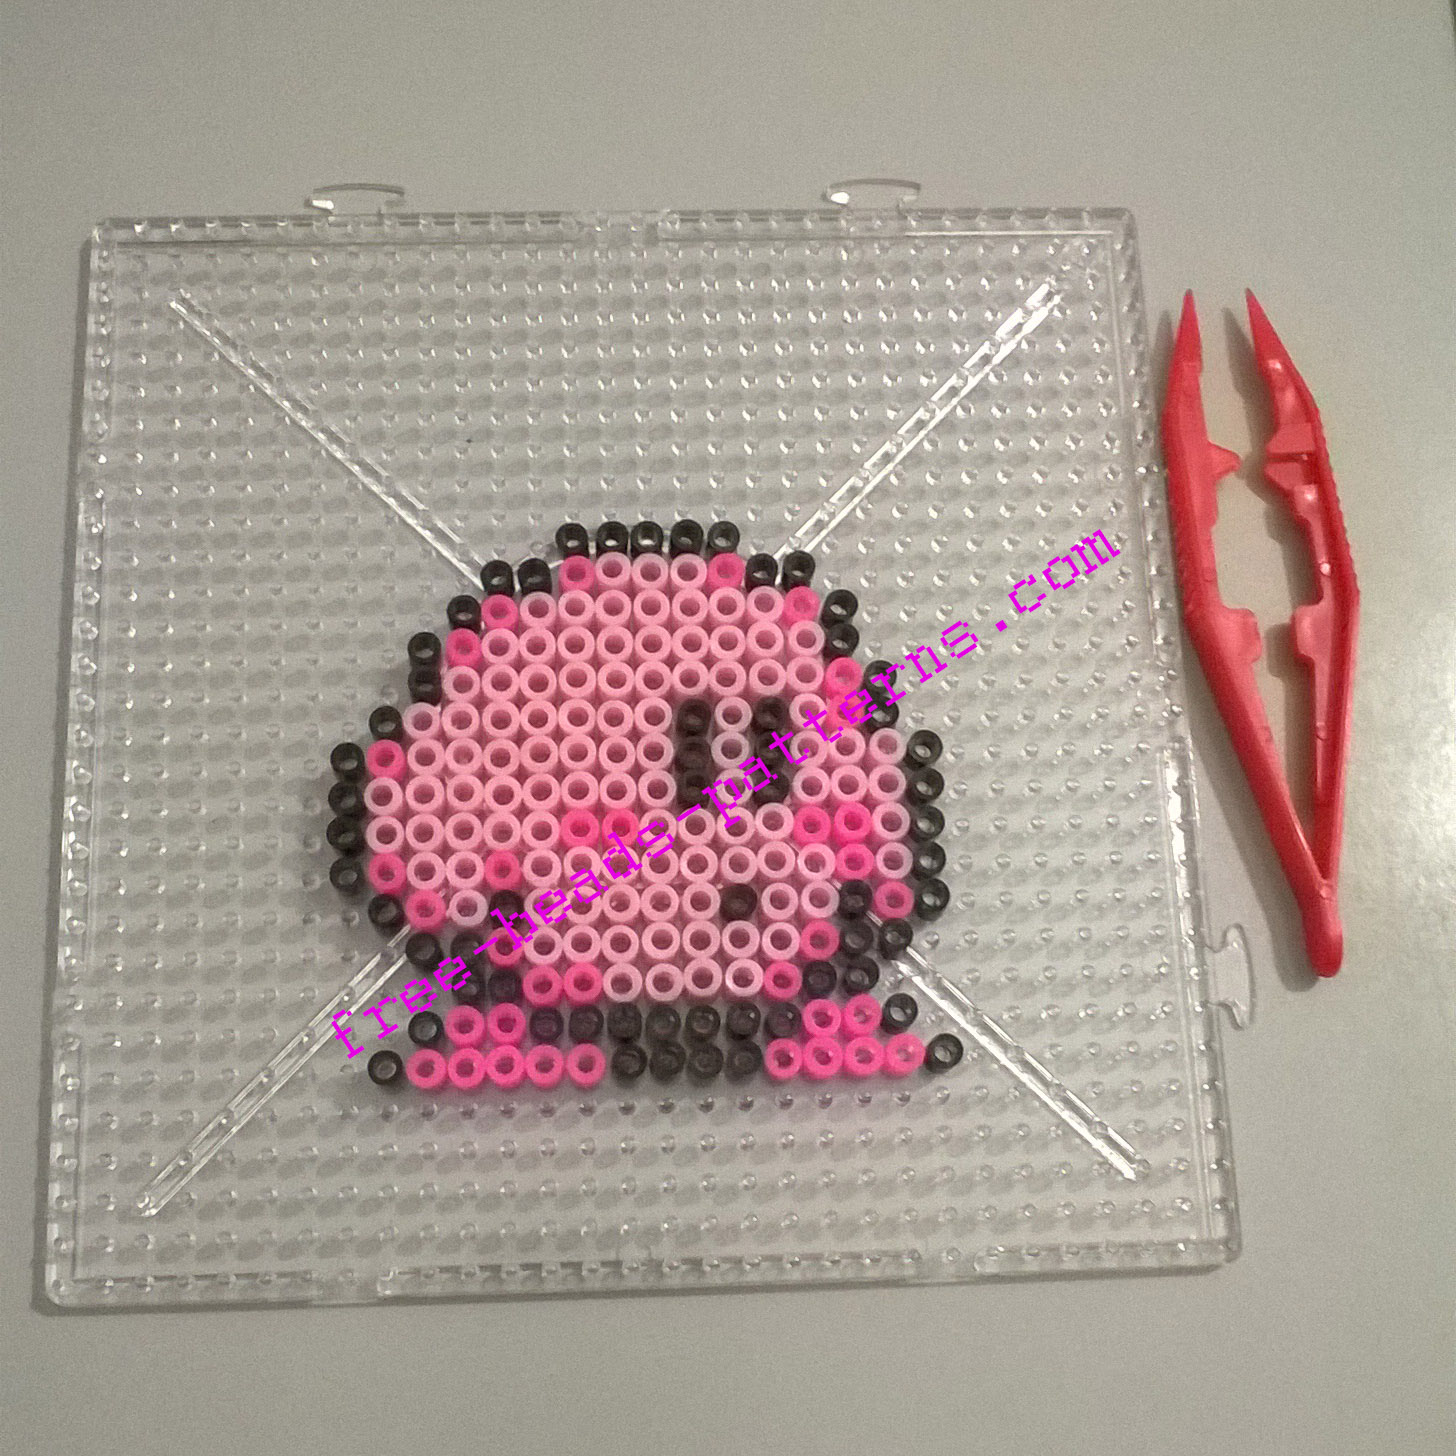 Nintendo retrogames Kirby perler beads pixel art work photos (1)